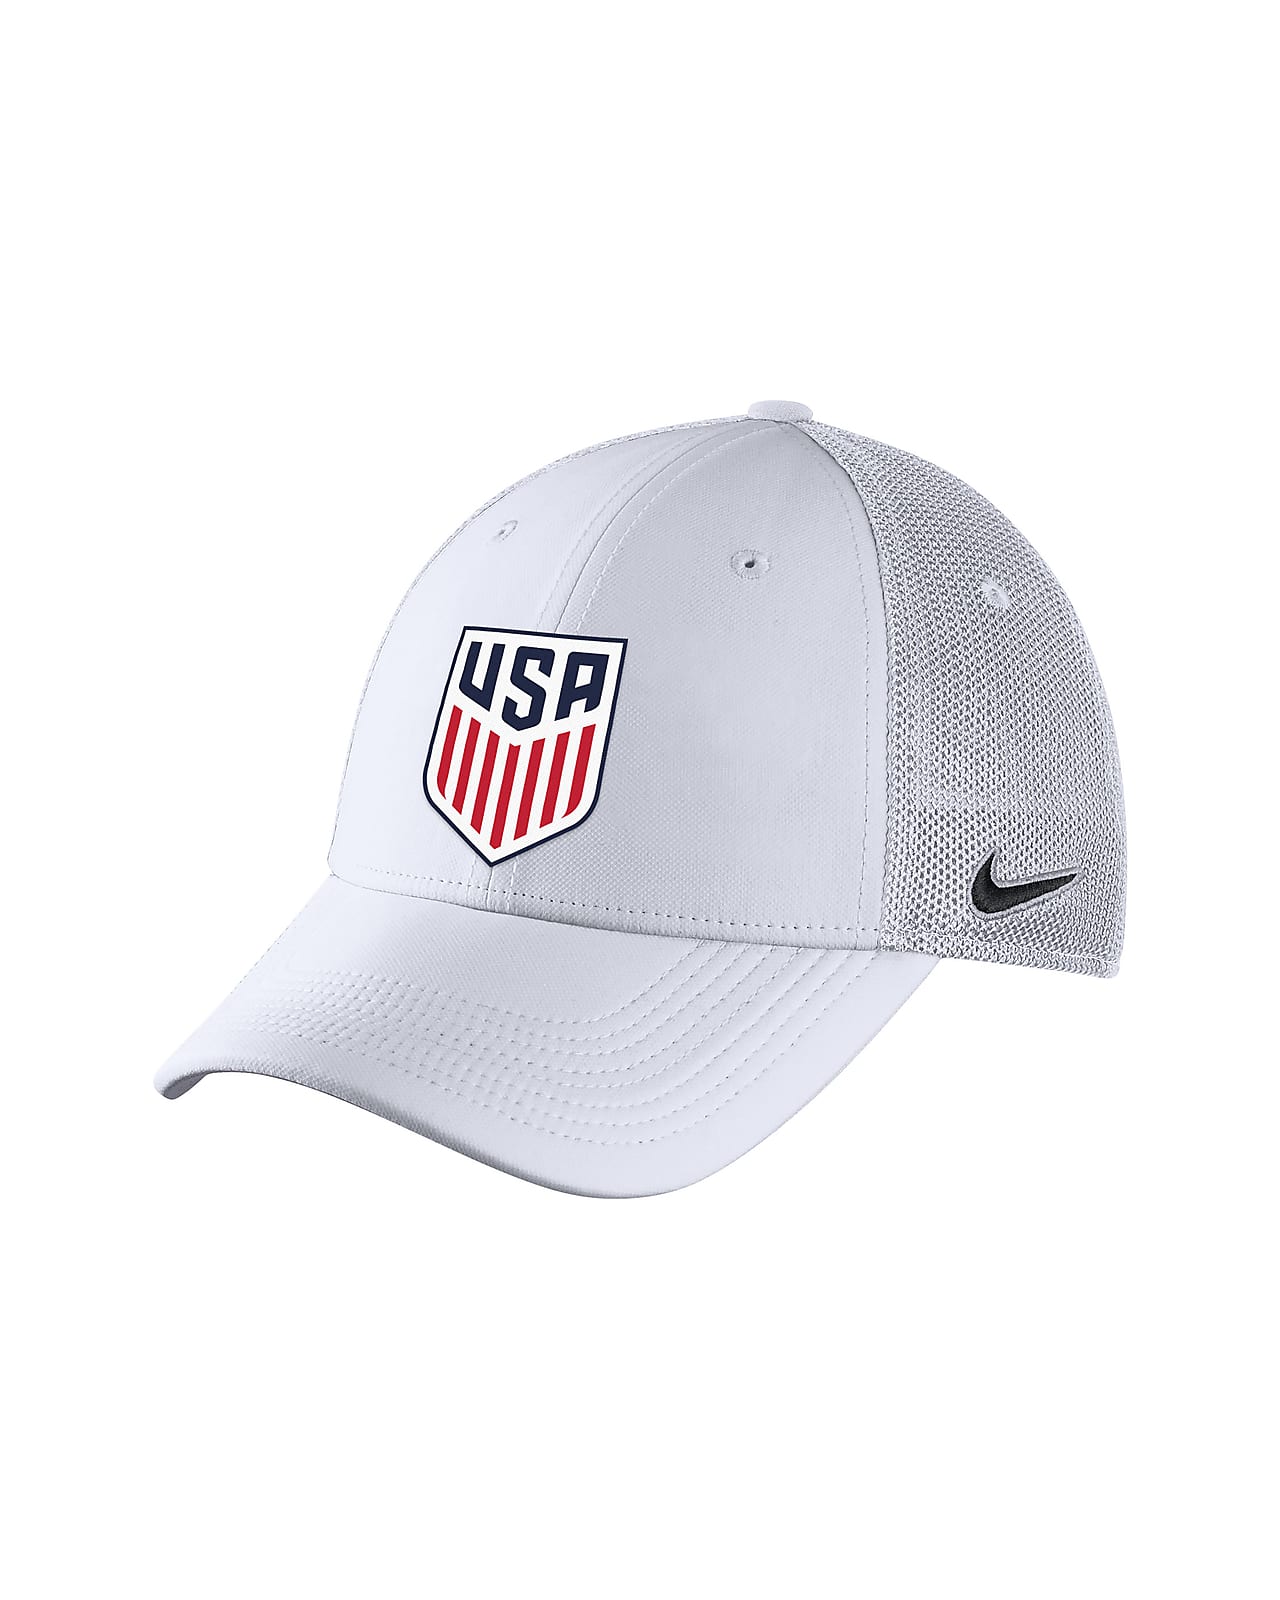 USMNT Legacy91 Men's Nike AeroBill Hat.